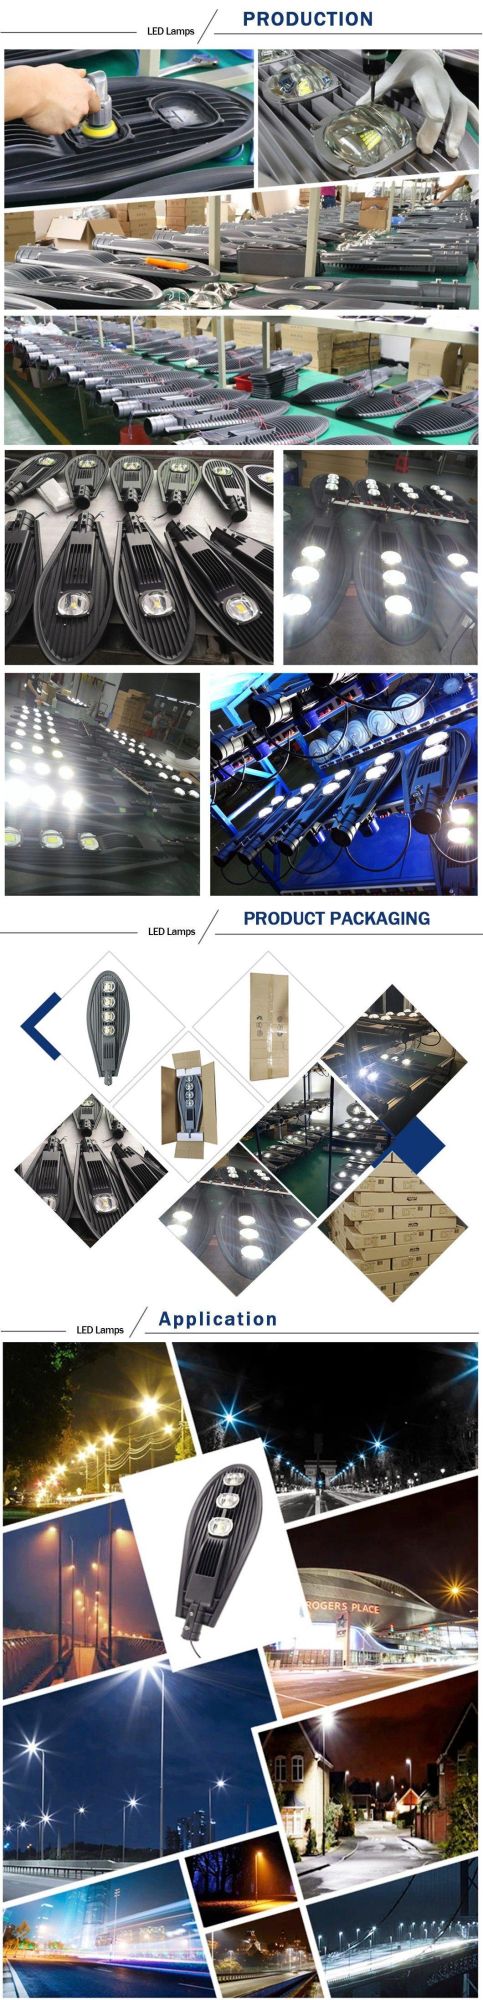 Factory COB Module LED Street Light Die-Cast Aluminum Lamp Body 100W